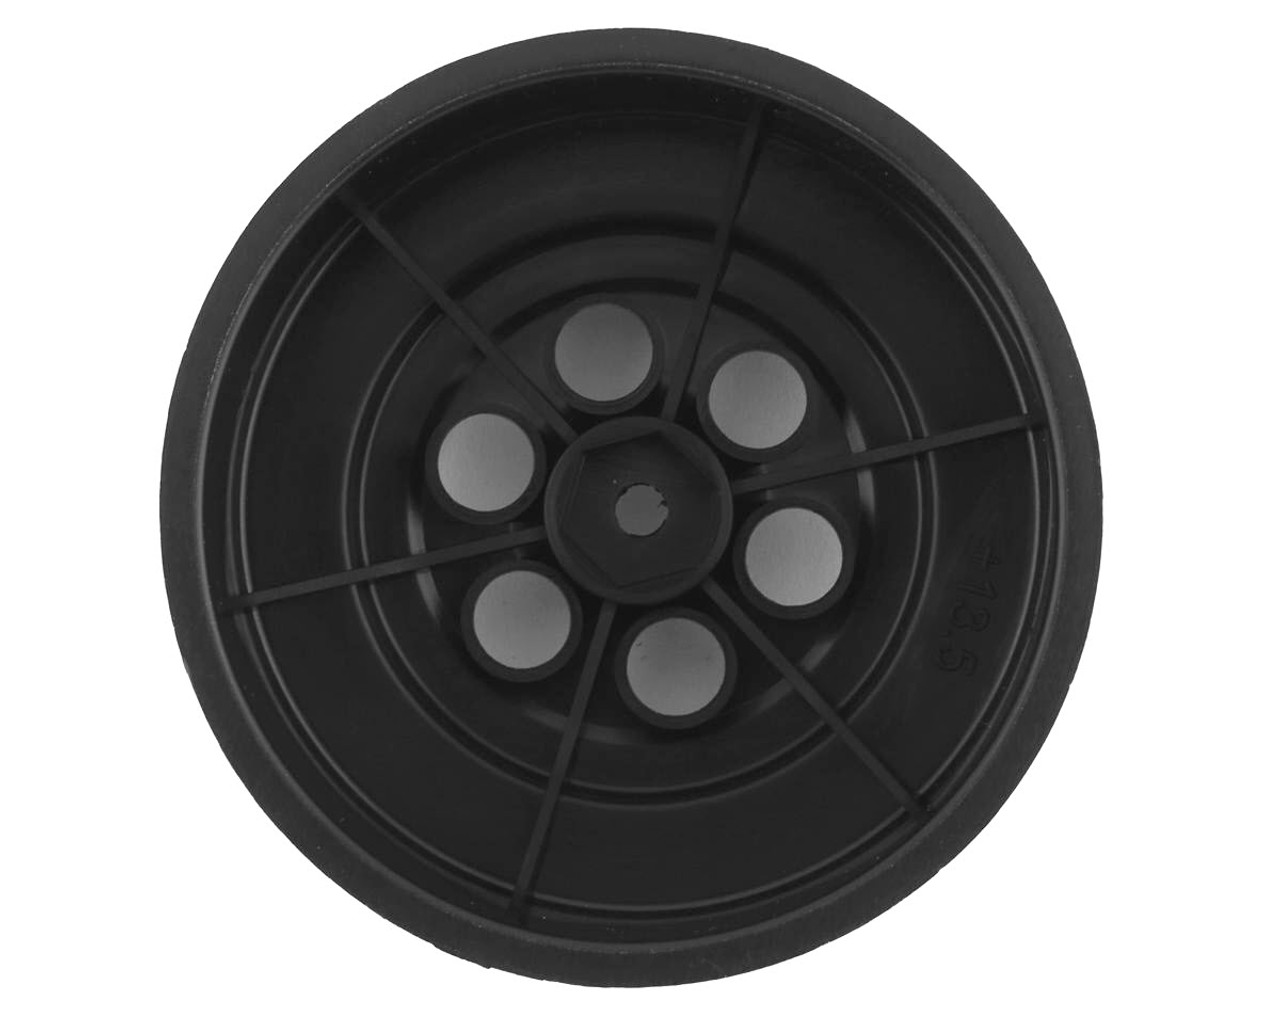 Tekno RC TR606 SCT Offset Short Course Wheels (Black) (4) w/12mm Hex